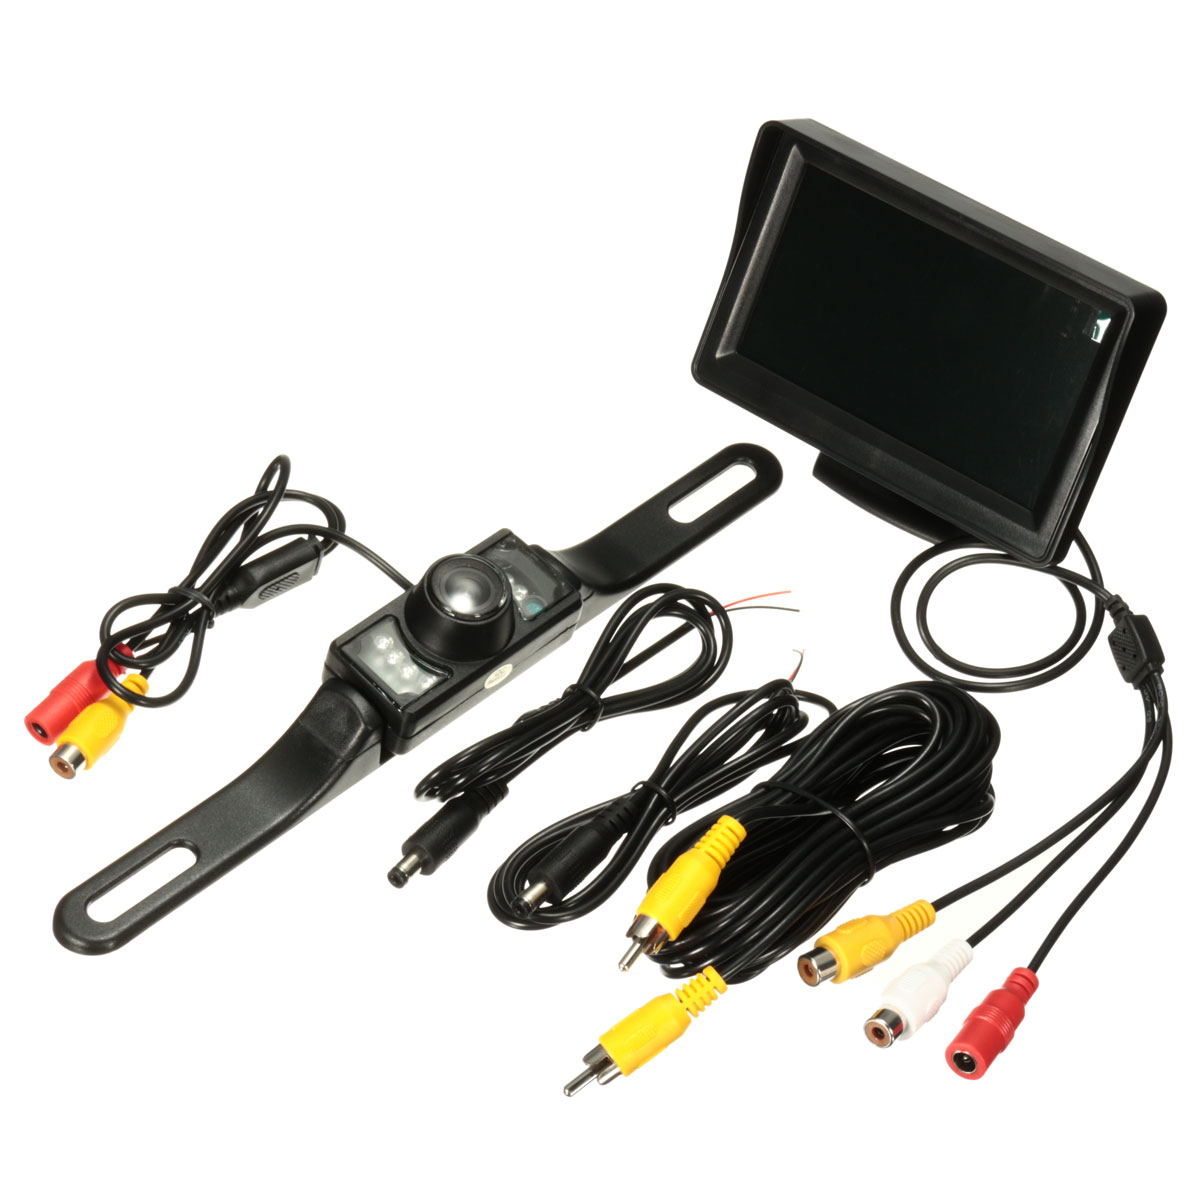 43-Inch-Car-TFT-LCD-Display-Rear-View-System-Kit-Monitor-Night-Vision-Reversing-Camera-Waterproof-1546422